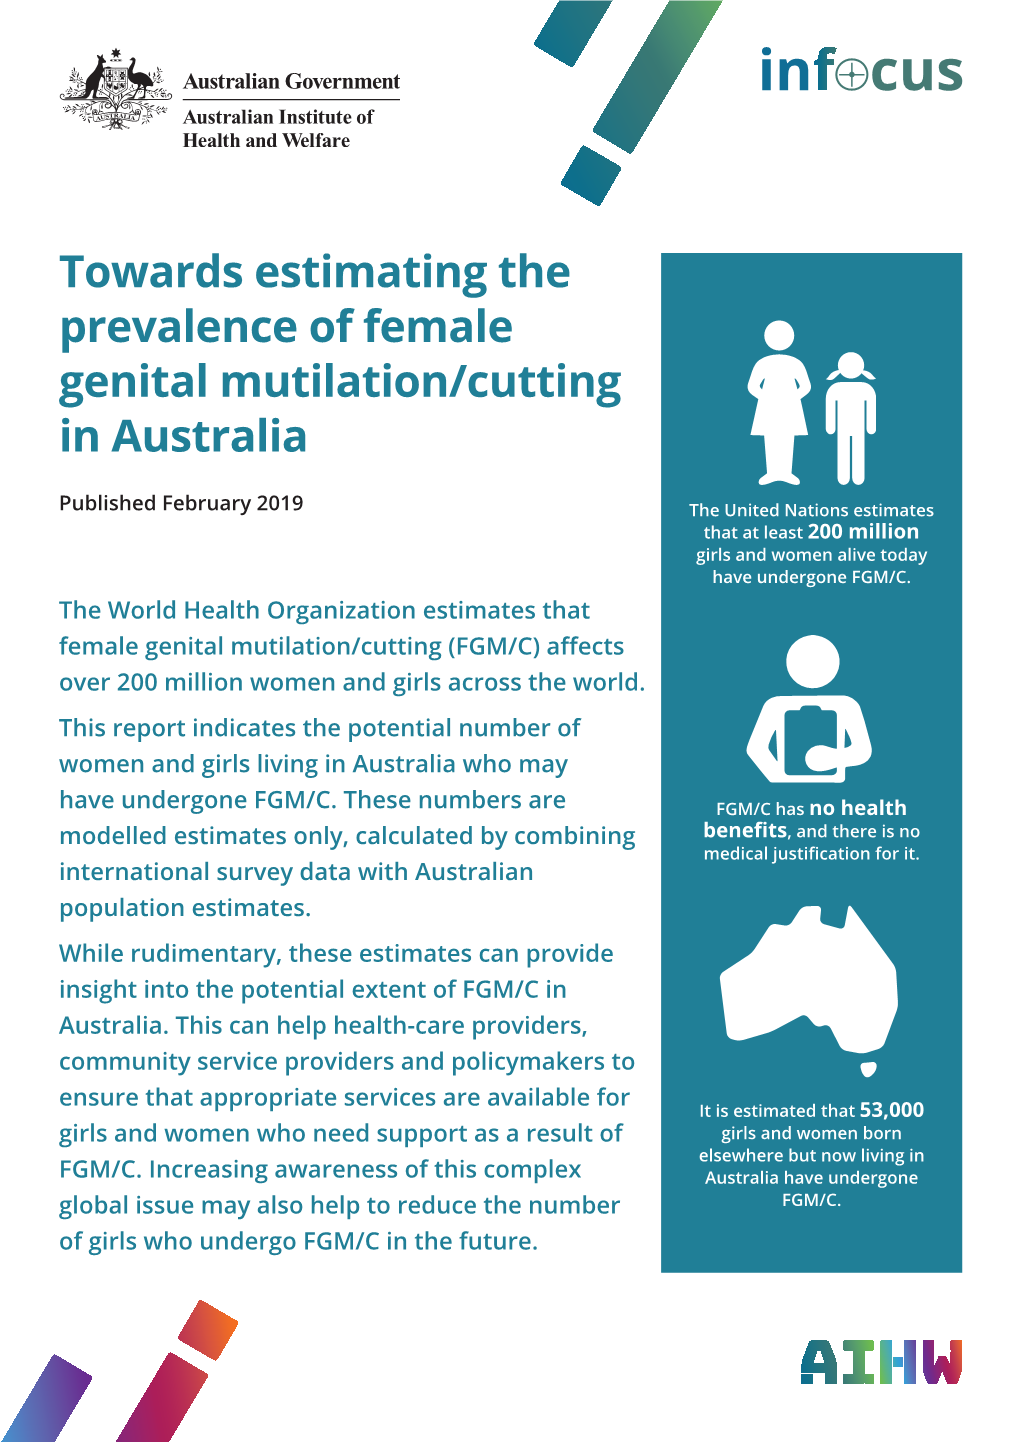 Towards Estimating the Prevalence of Female Genital Mutilation/Cutting in Australia